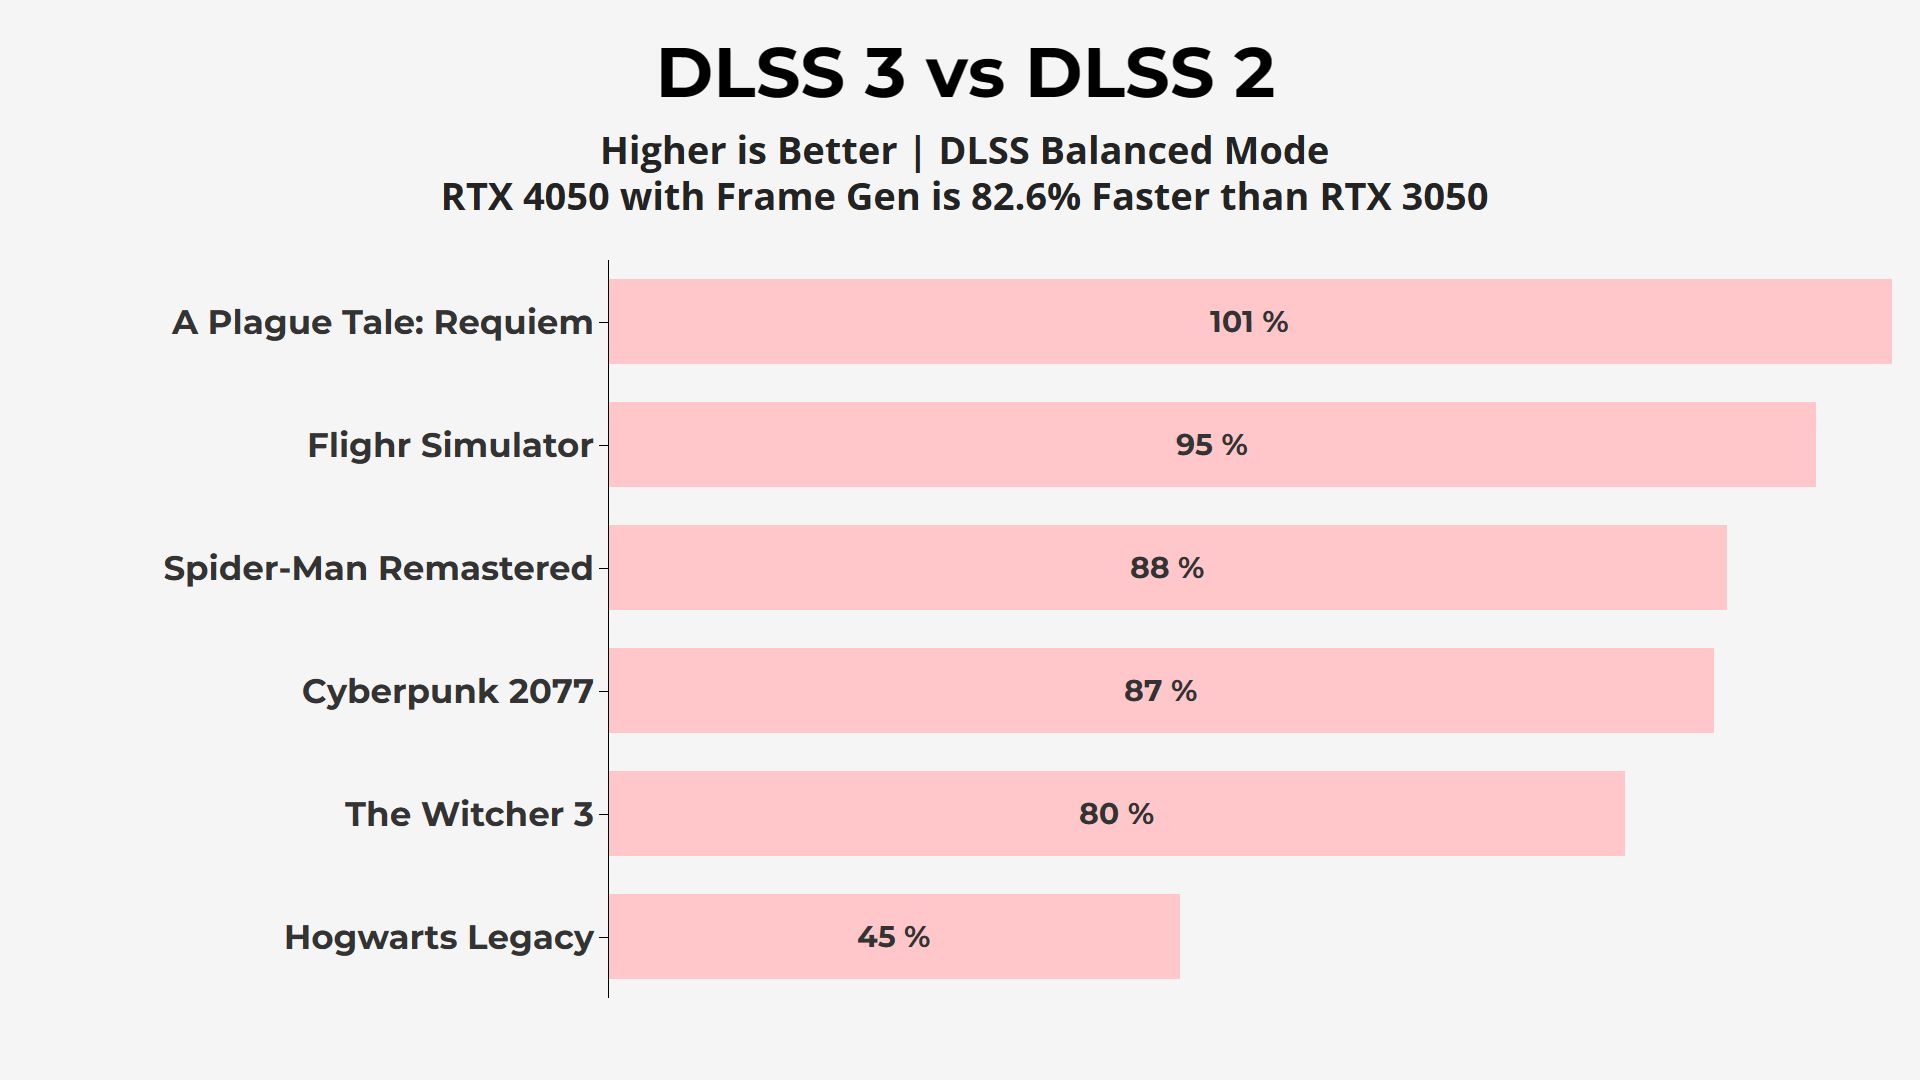 RTX 4050 vs 3050 DLSS 3 vs DLSS 2